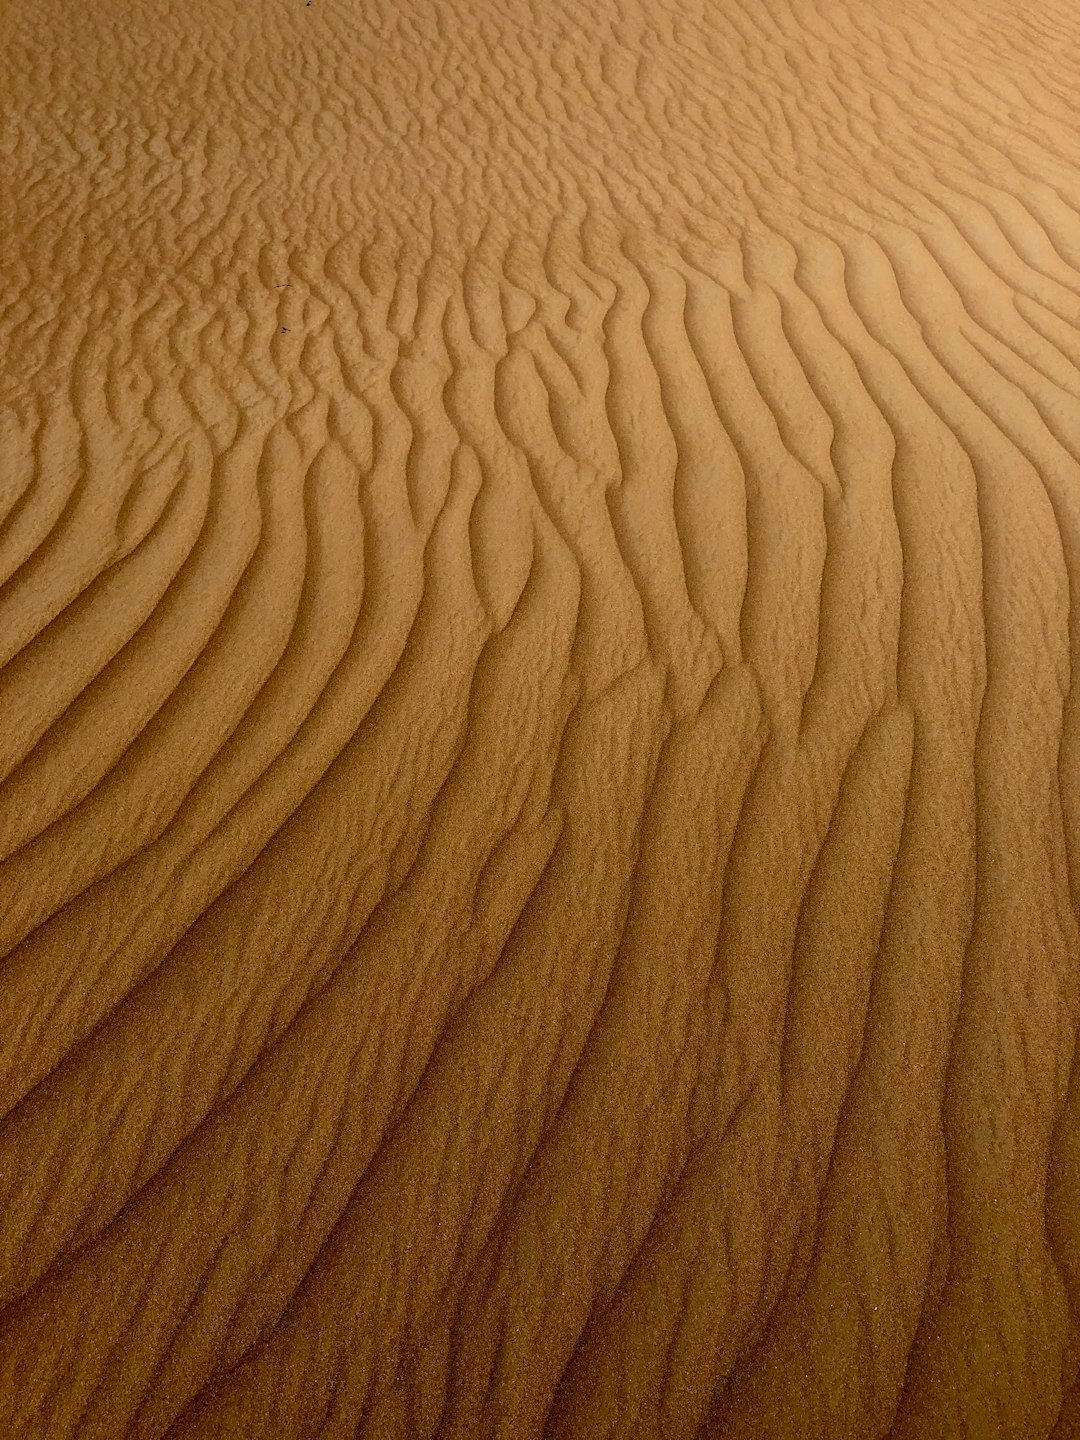 Desert photo spot Margham Ras al Khaimah - United Arab Emirates